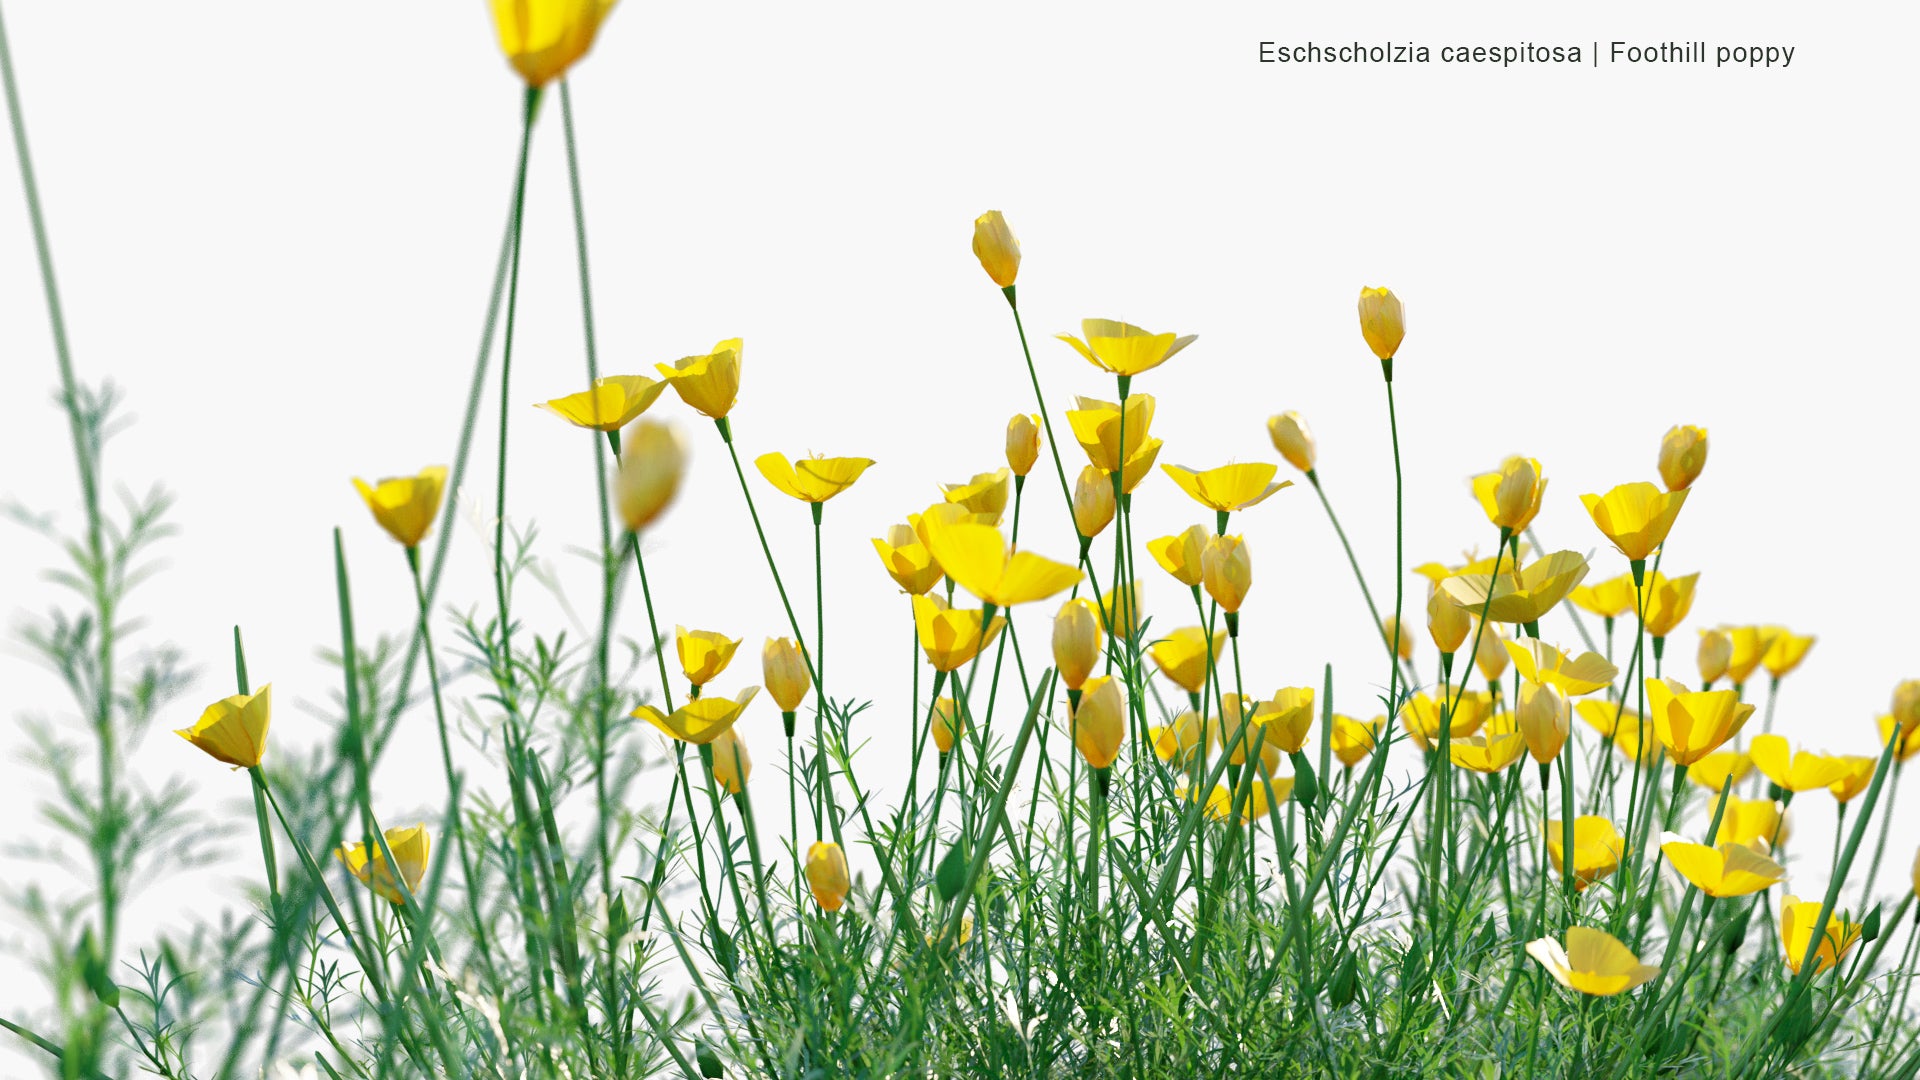 Low Poly Eschscholzia Caespitosa - Foothill Poppy, Tufted Poppy, Collarless California Poppy (3D Model)